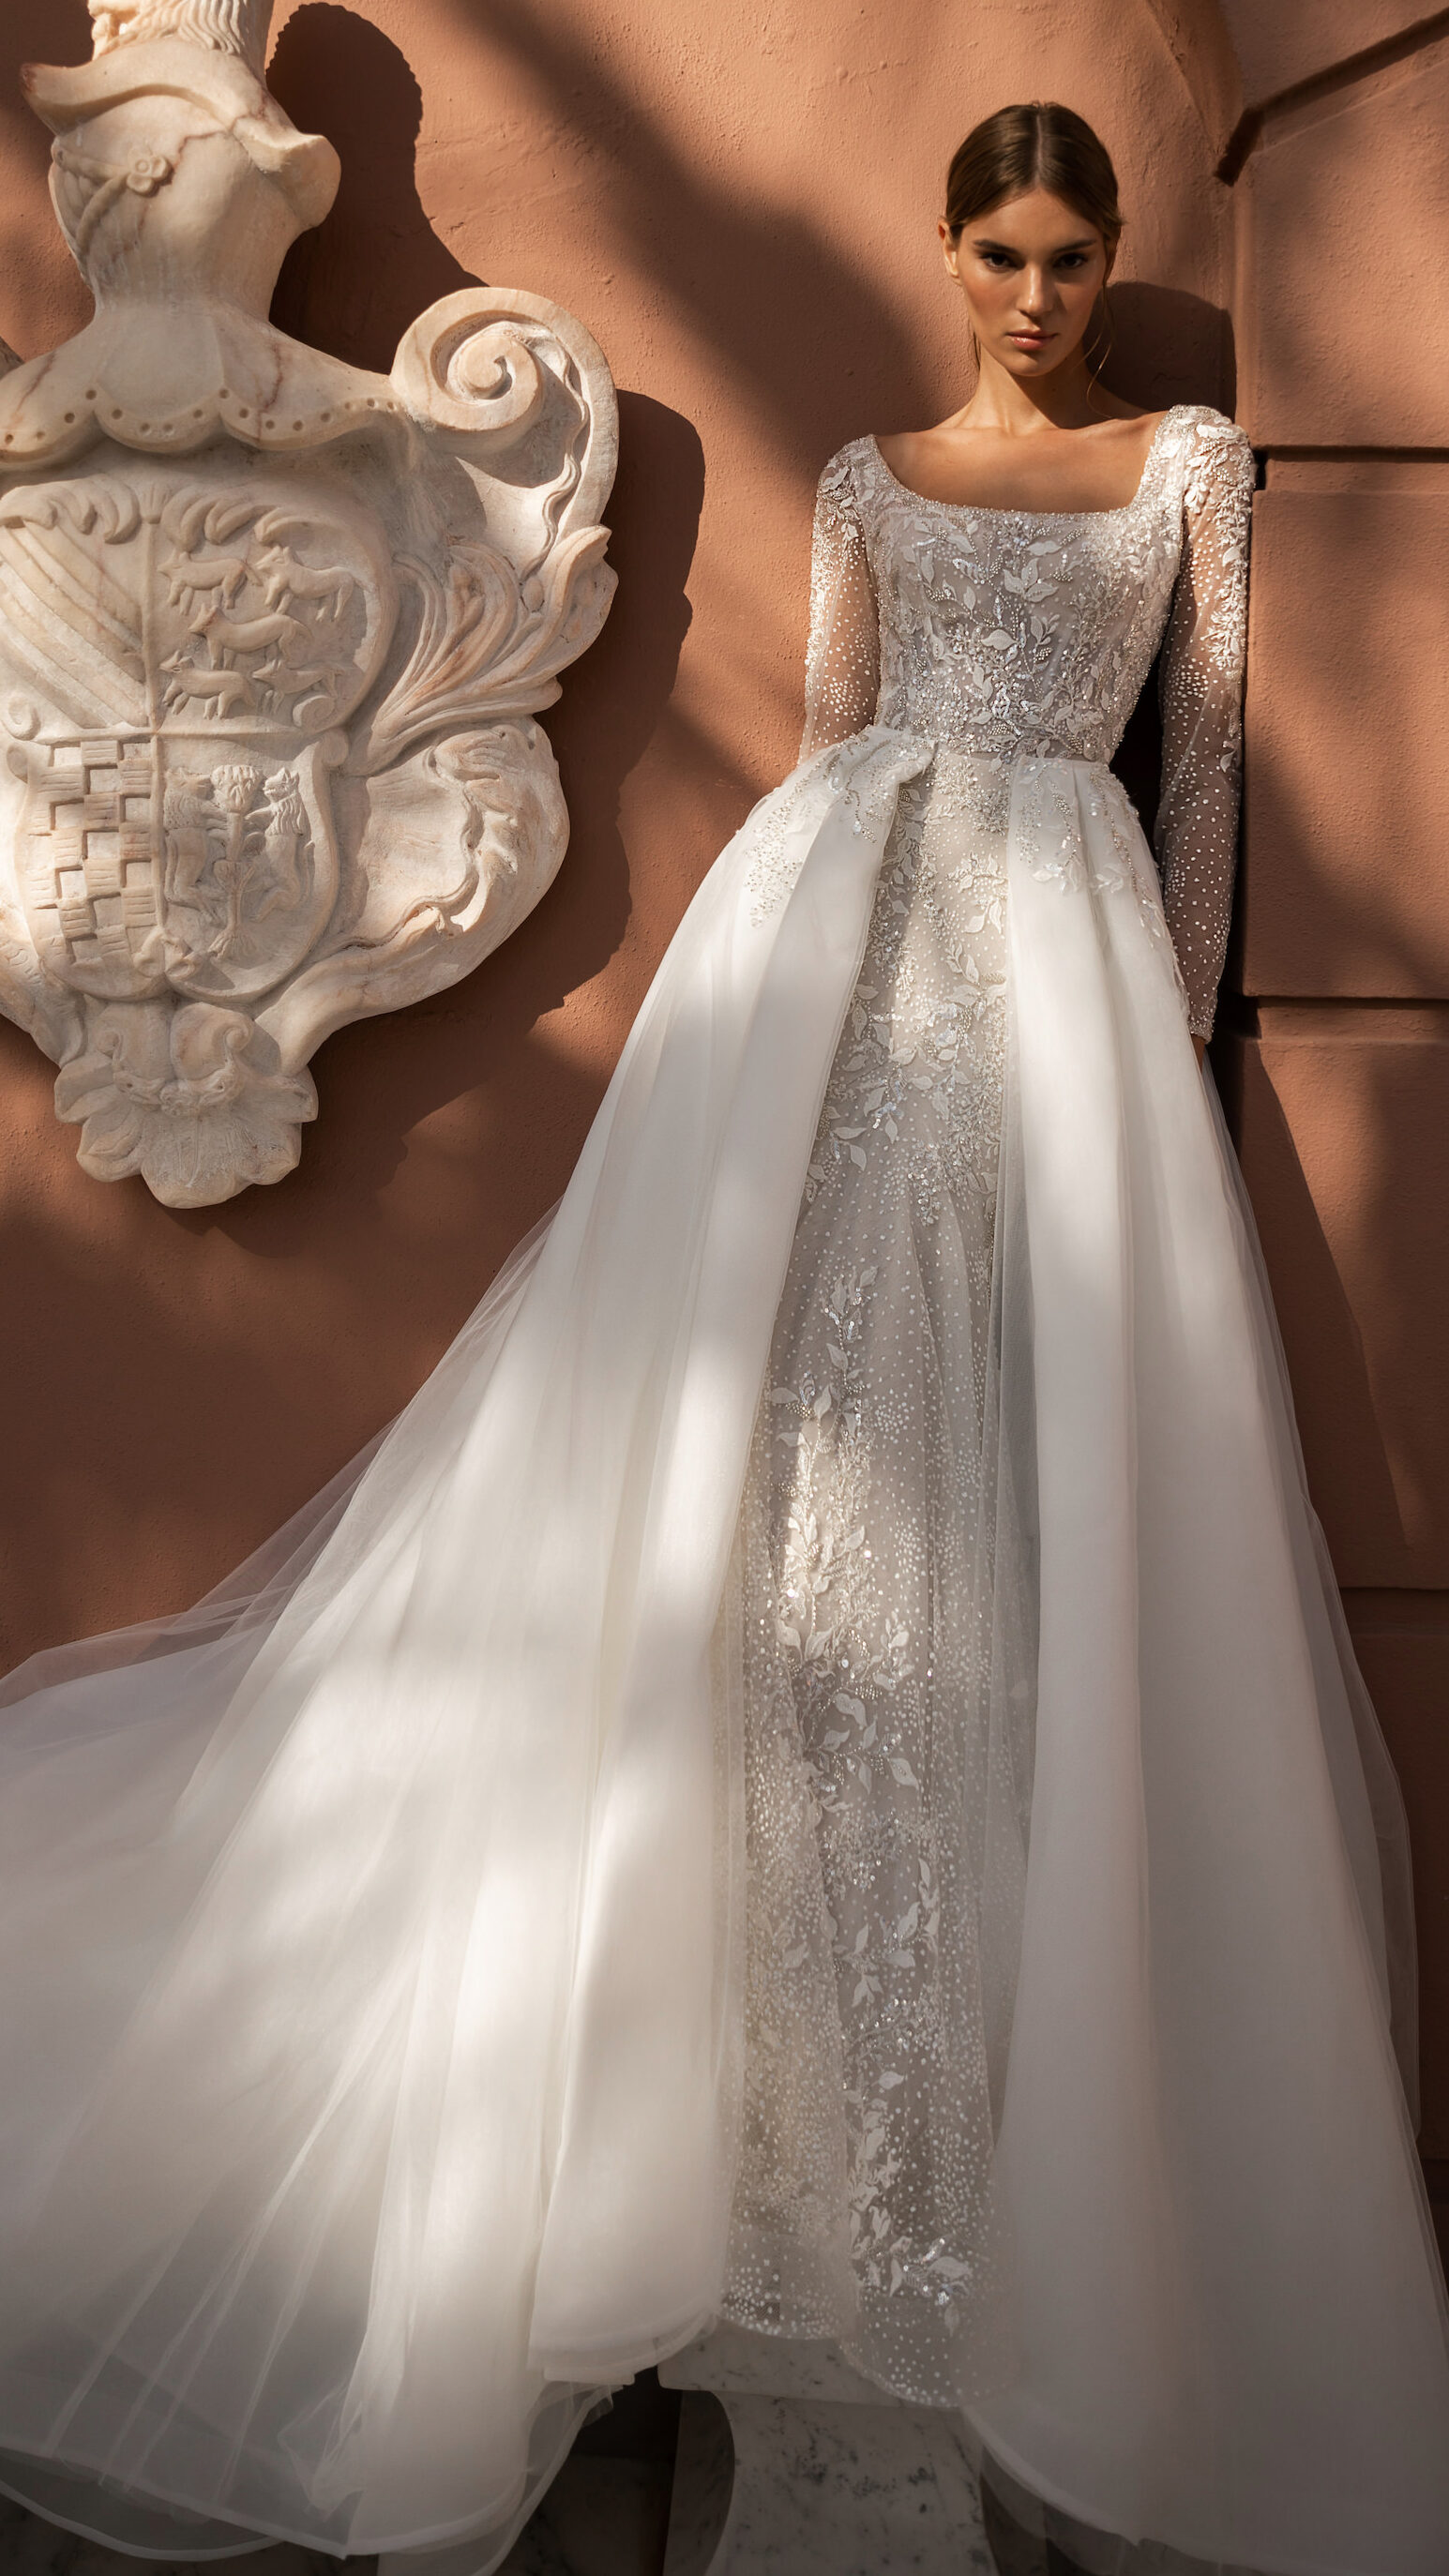 Villano by Armonia wedding dress